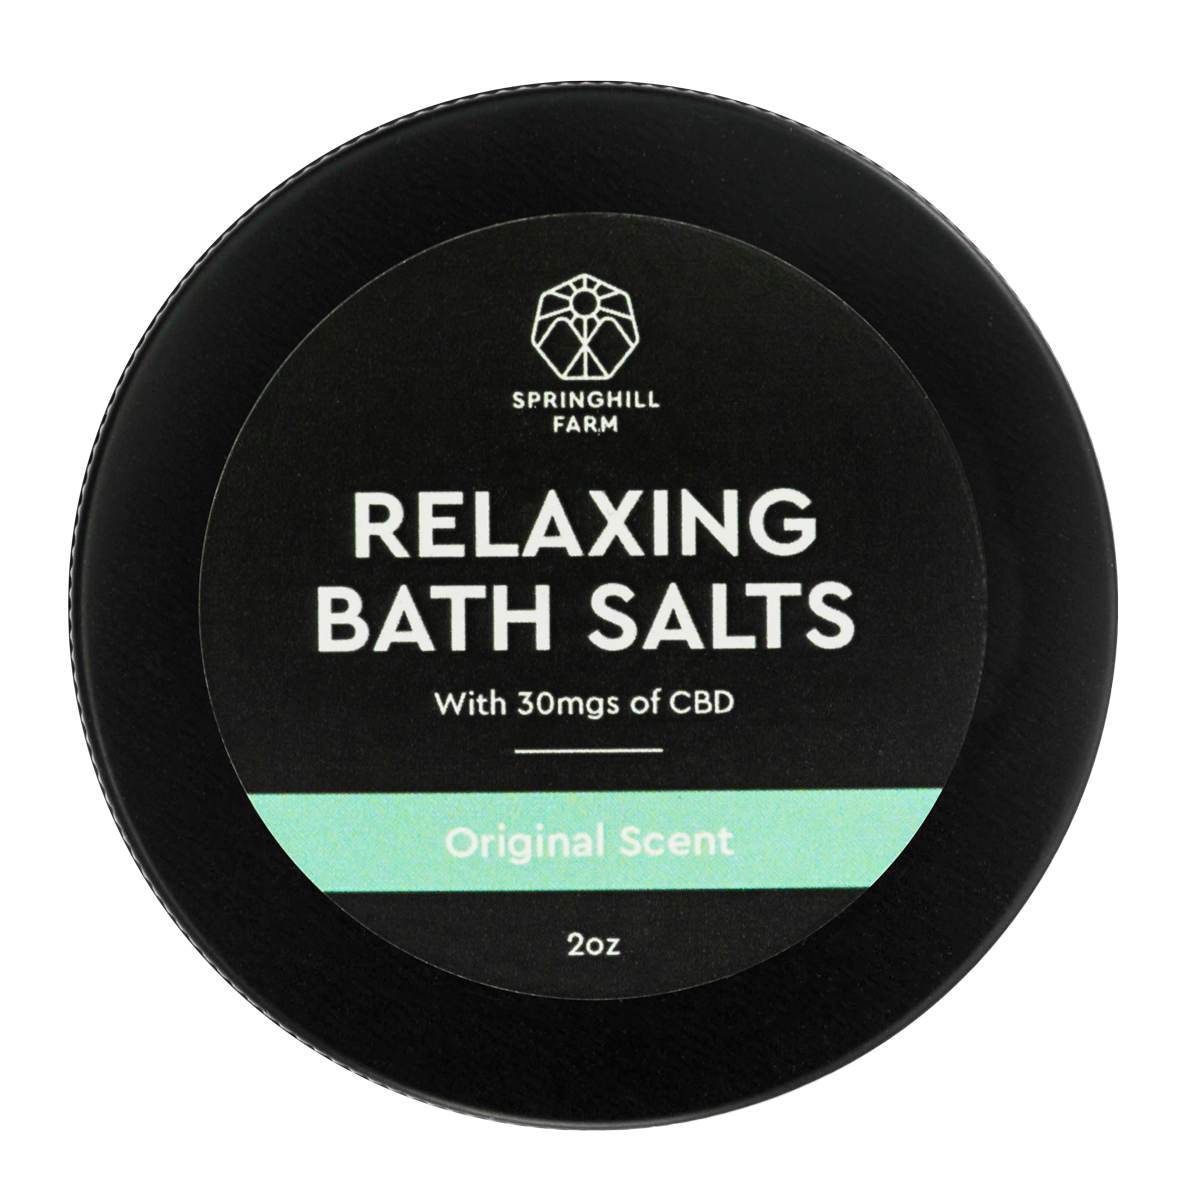 Original Bath Salts